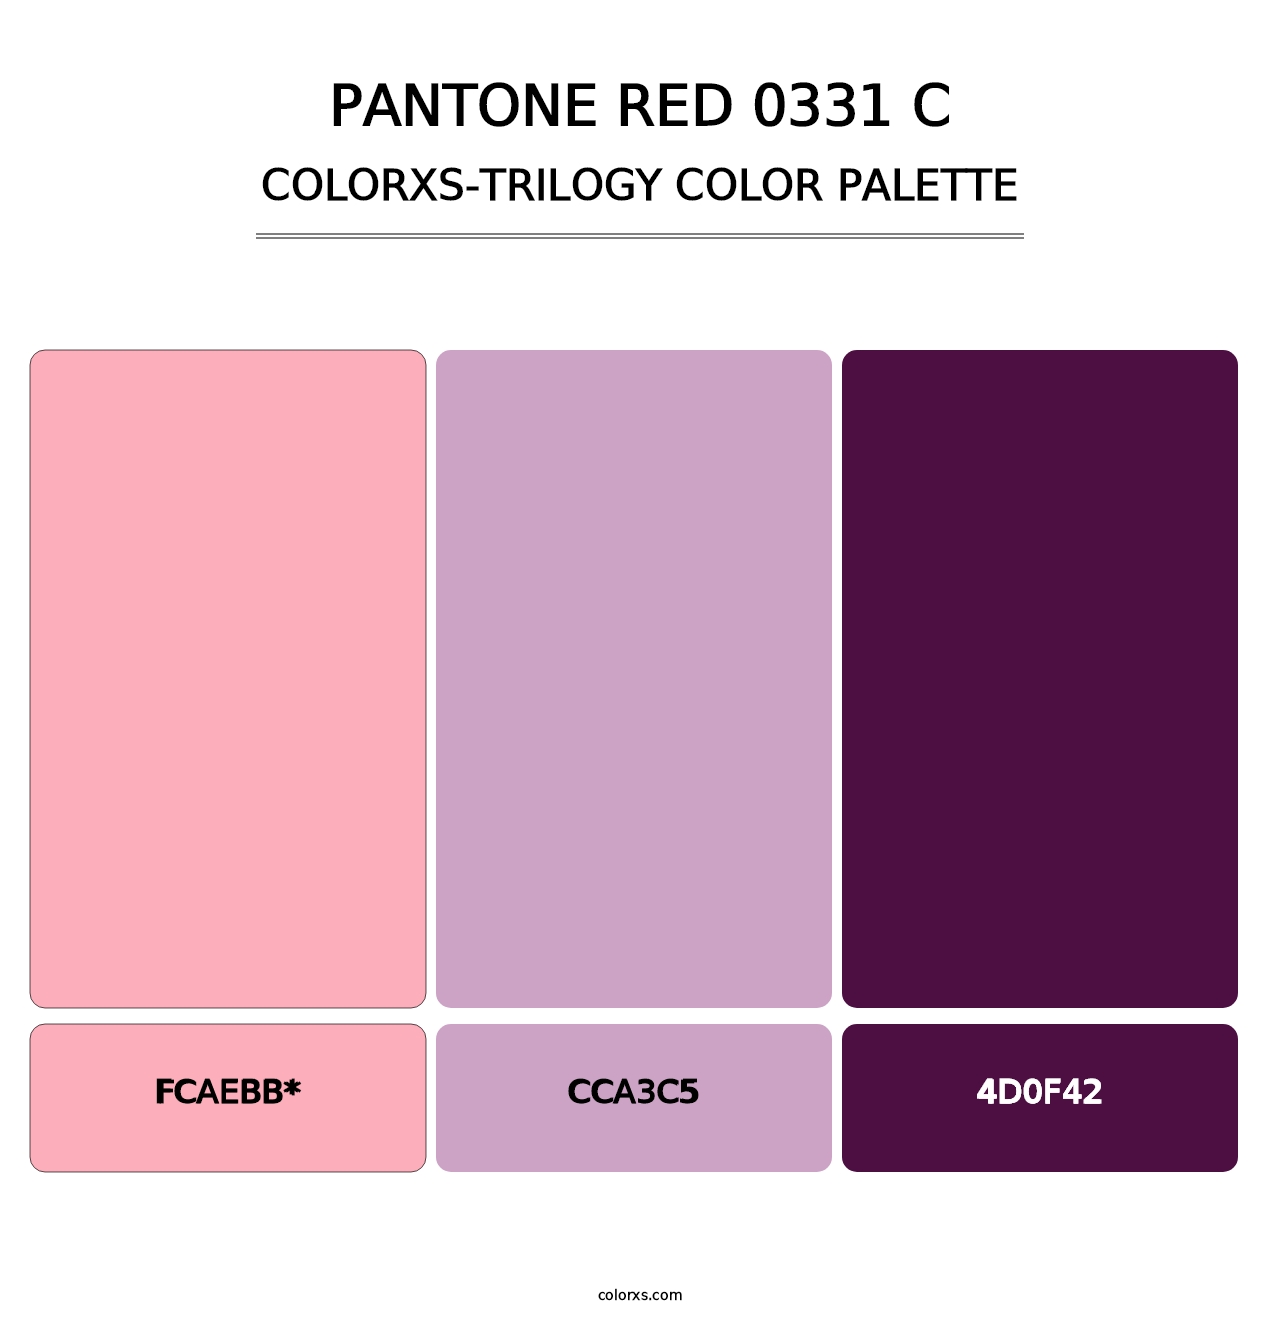 PANTONE Red 0331 C - Colorxs Trilogy Palette